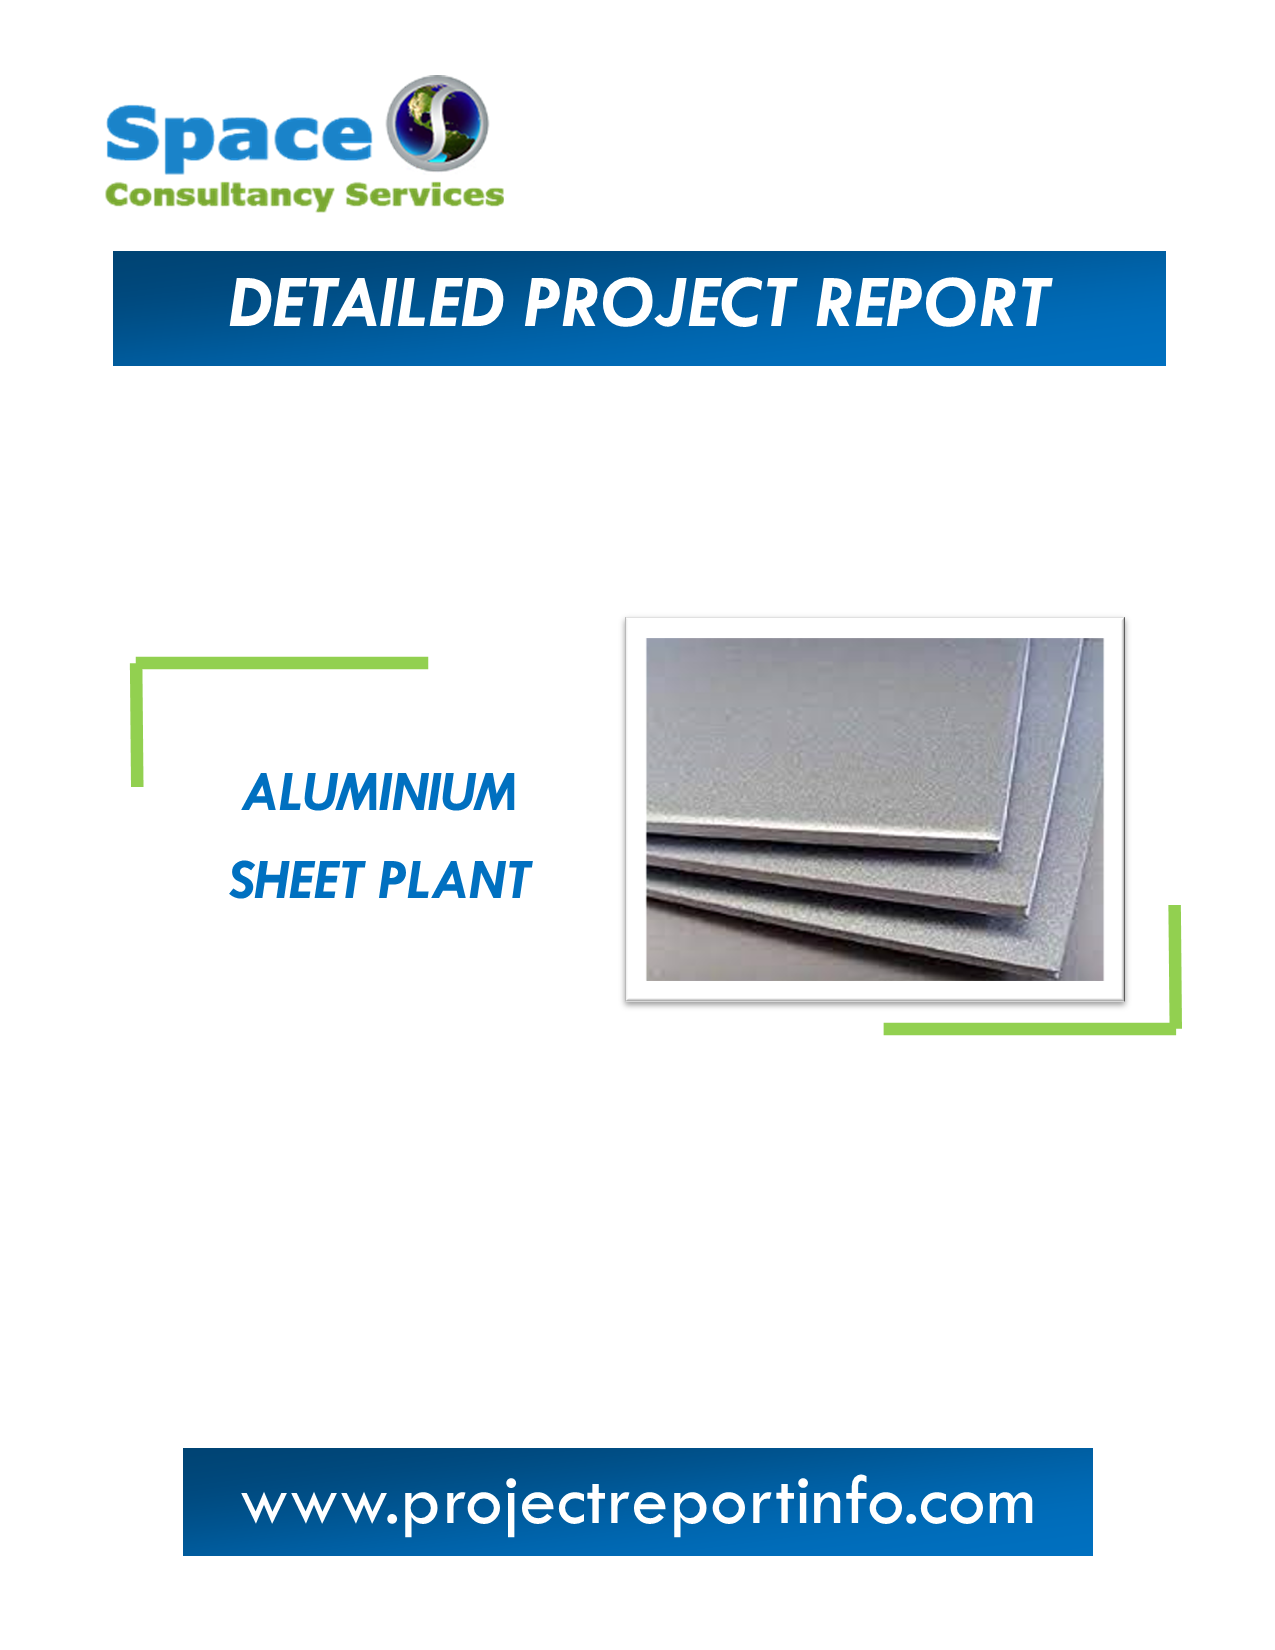 Project Report on Aluminium Sheet Plant